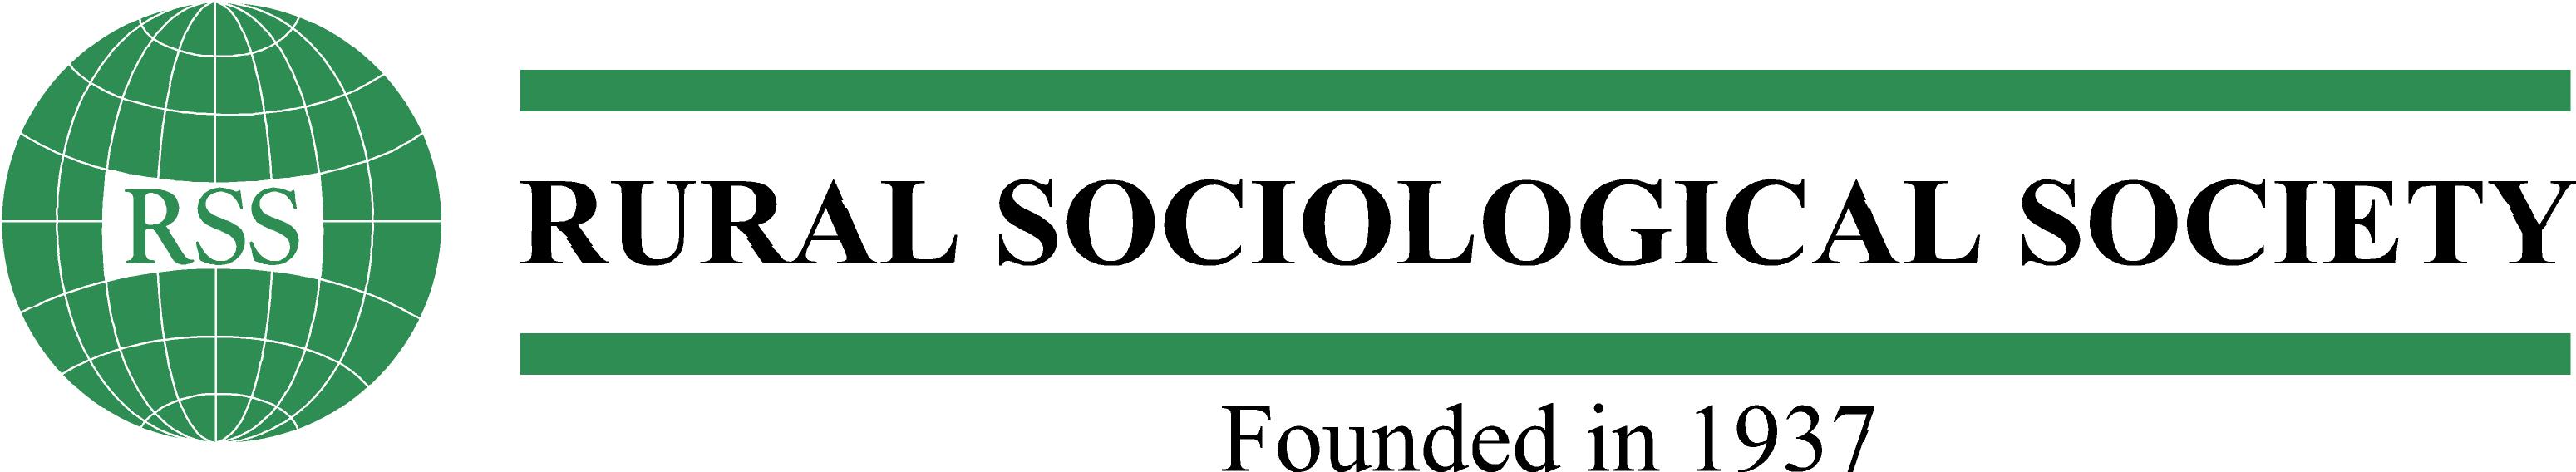 logo for Rural Sociological Society